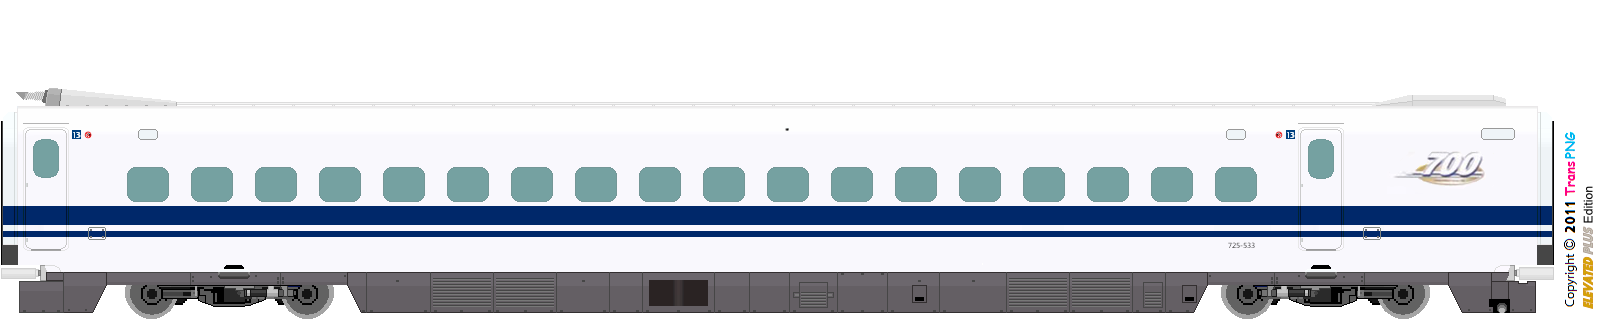 [9010] Central Japan Railway 52288069085_6570ac2bcf_o